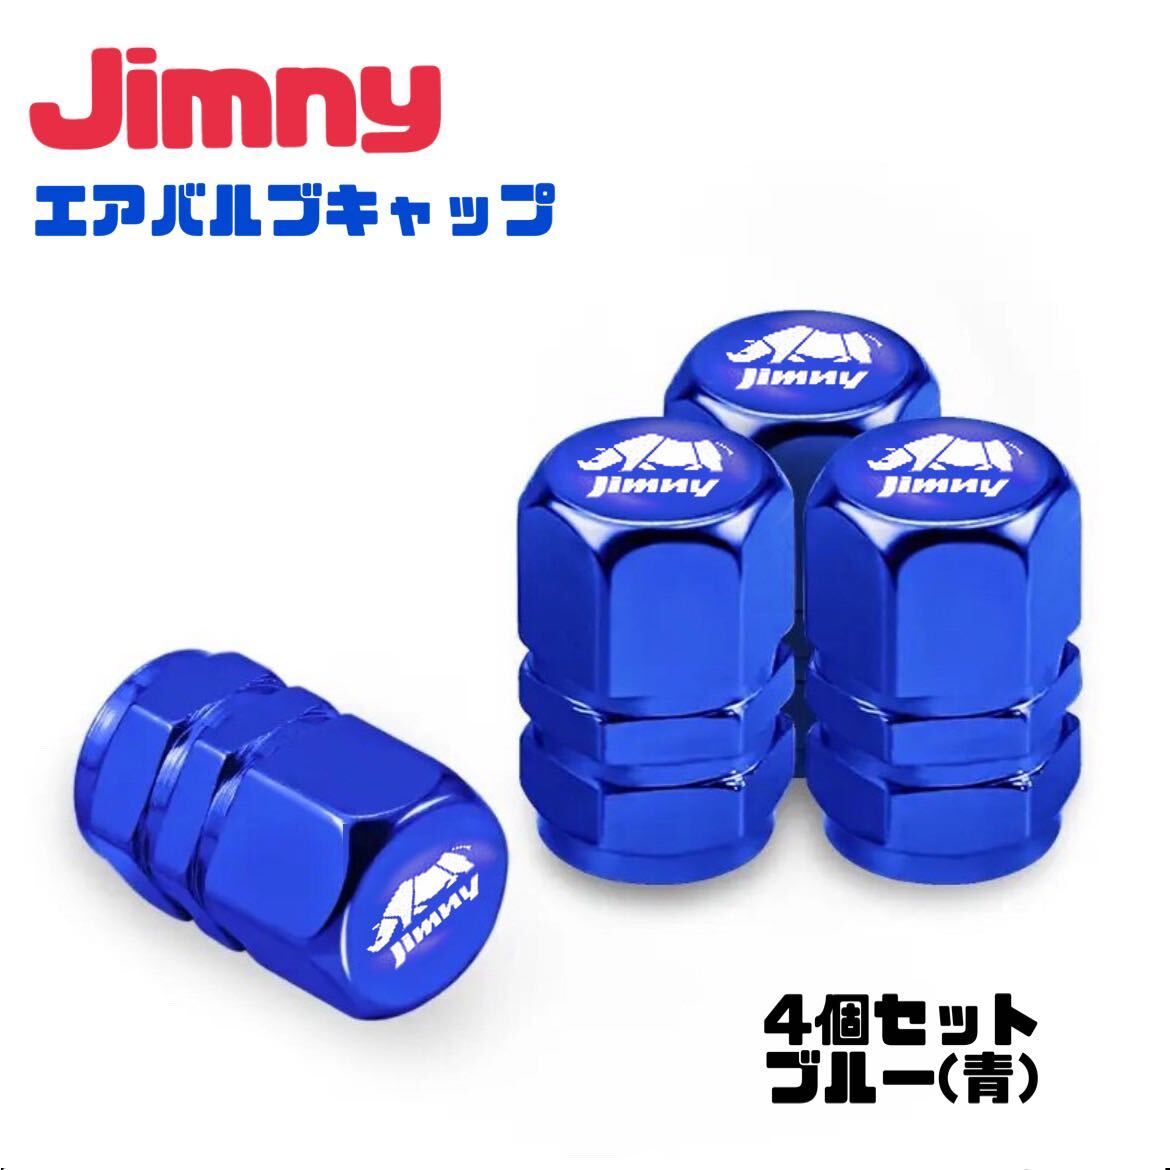 [ голубой ]Jimmy Suzuki Jimny воздушный клапан алюминиевый воздушный колпак воздушный клапан воздушный крышка клапана шина клапан(лампа) JB64 JB23 Sierra 